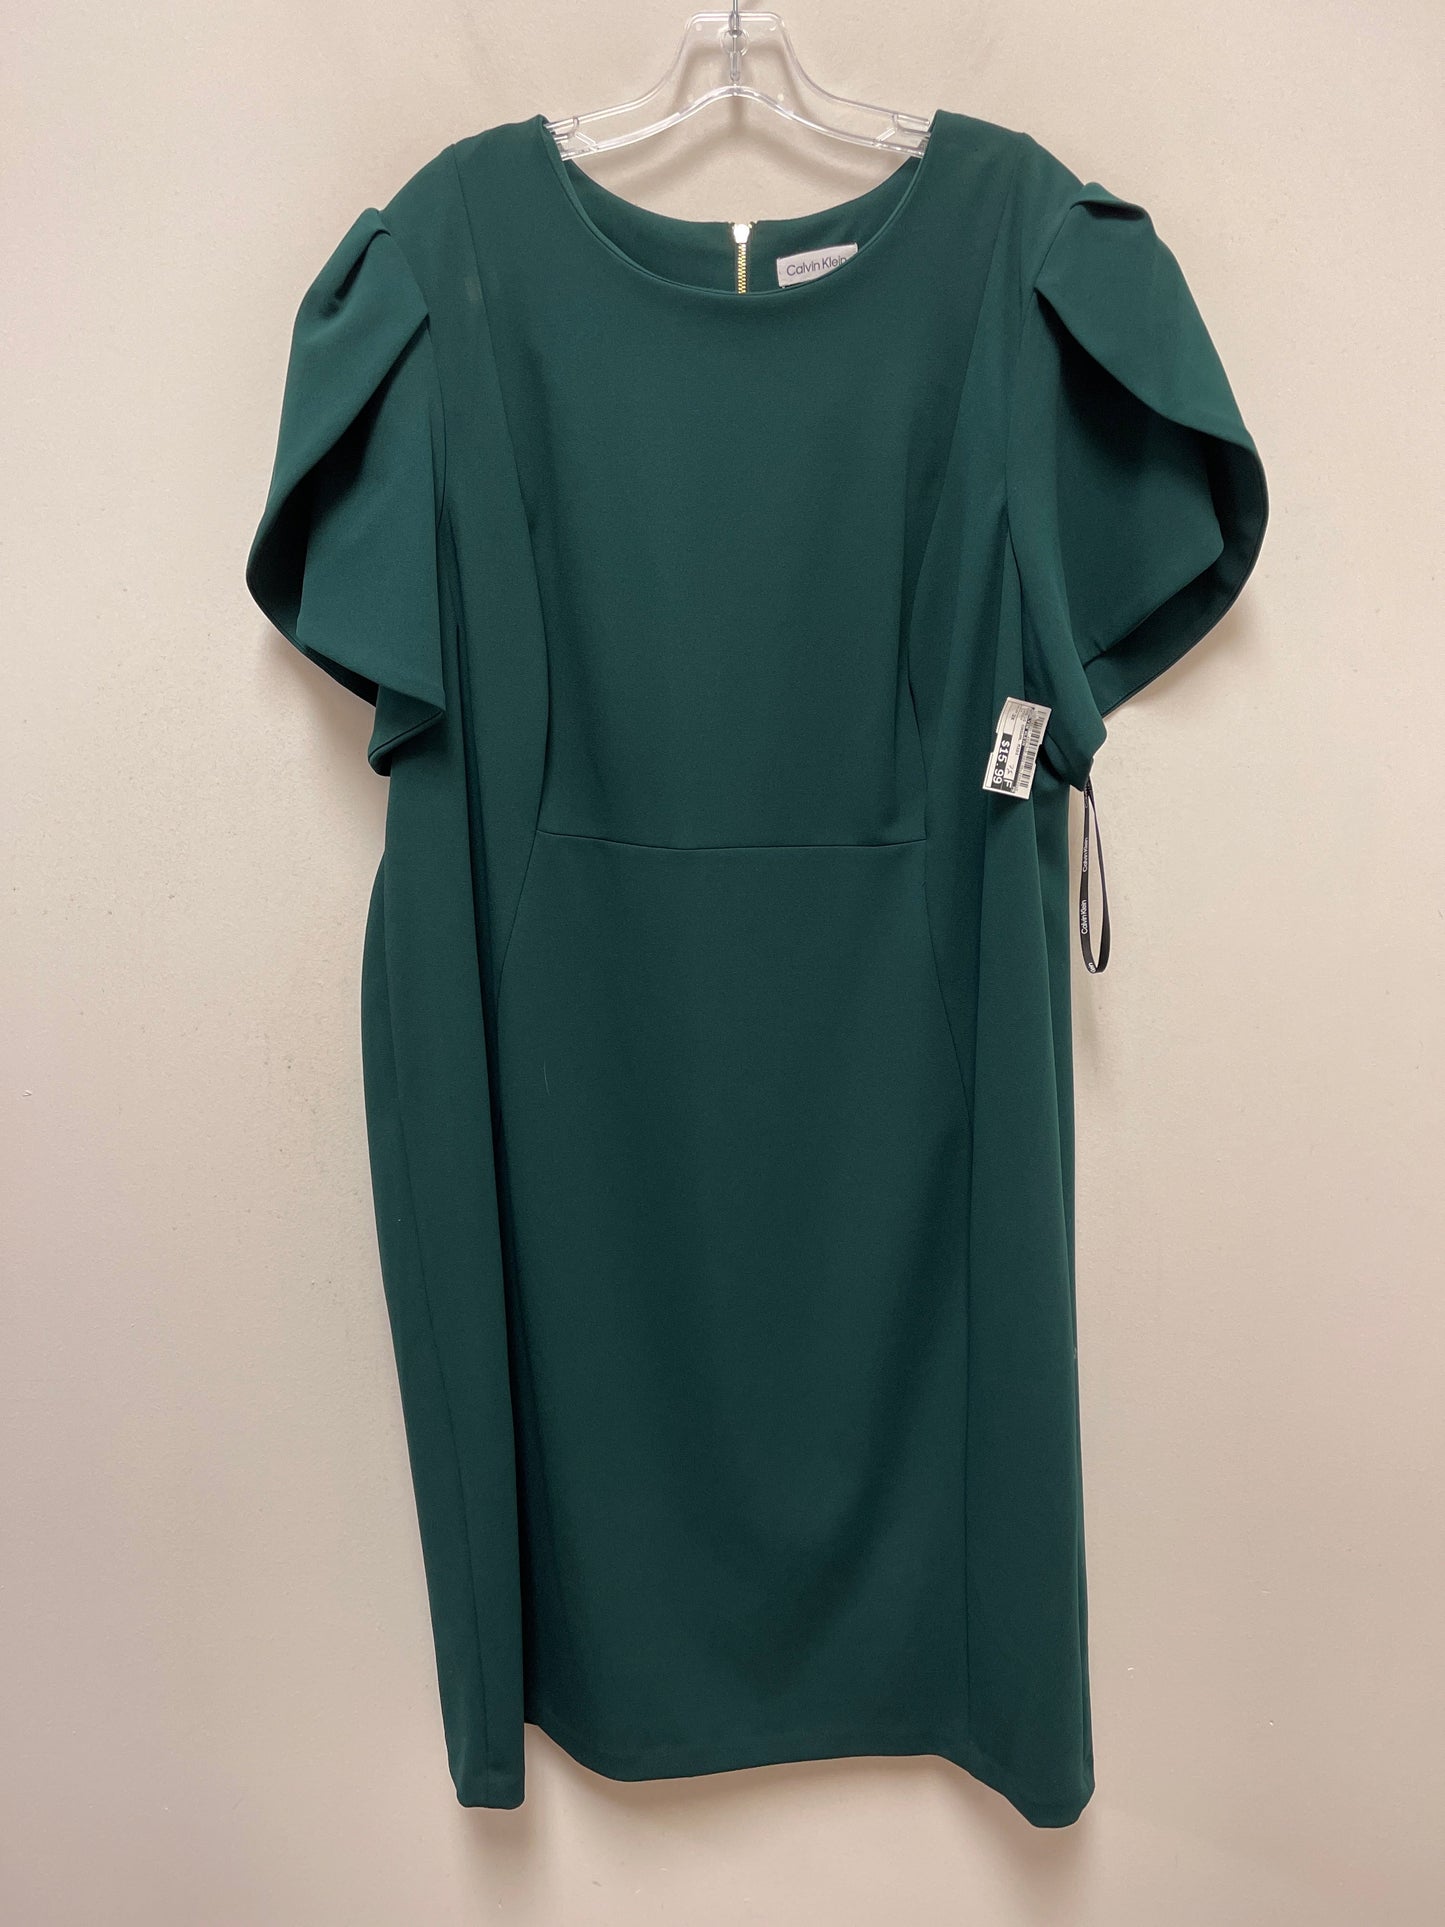 Green Dress Casual Midi Calvin Klein, Size 3x